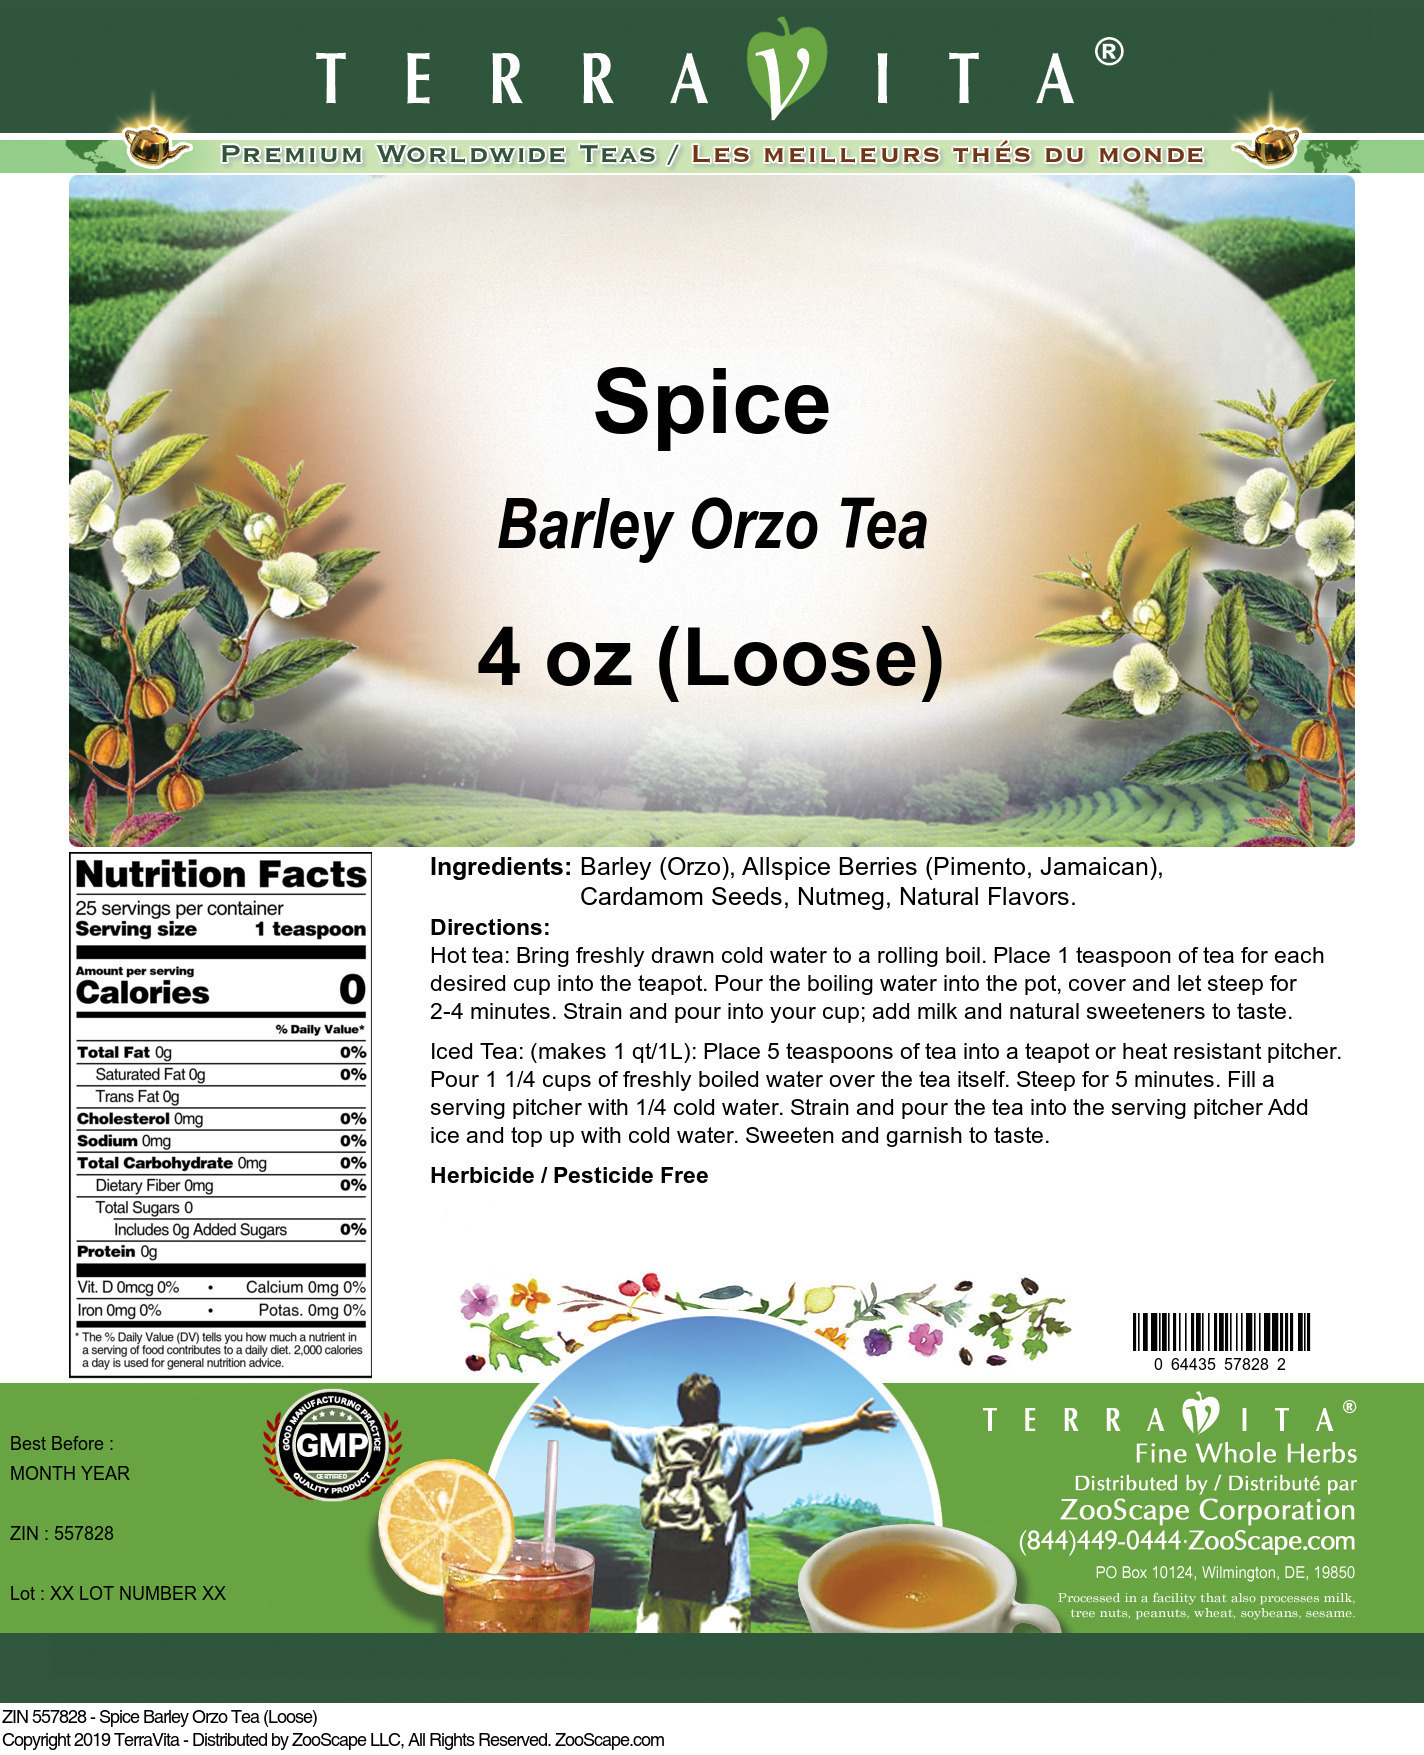 Spice Barley Orzo Tea (Loose) - Label